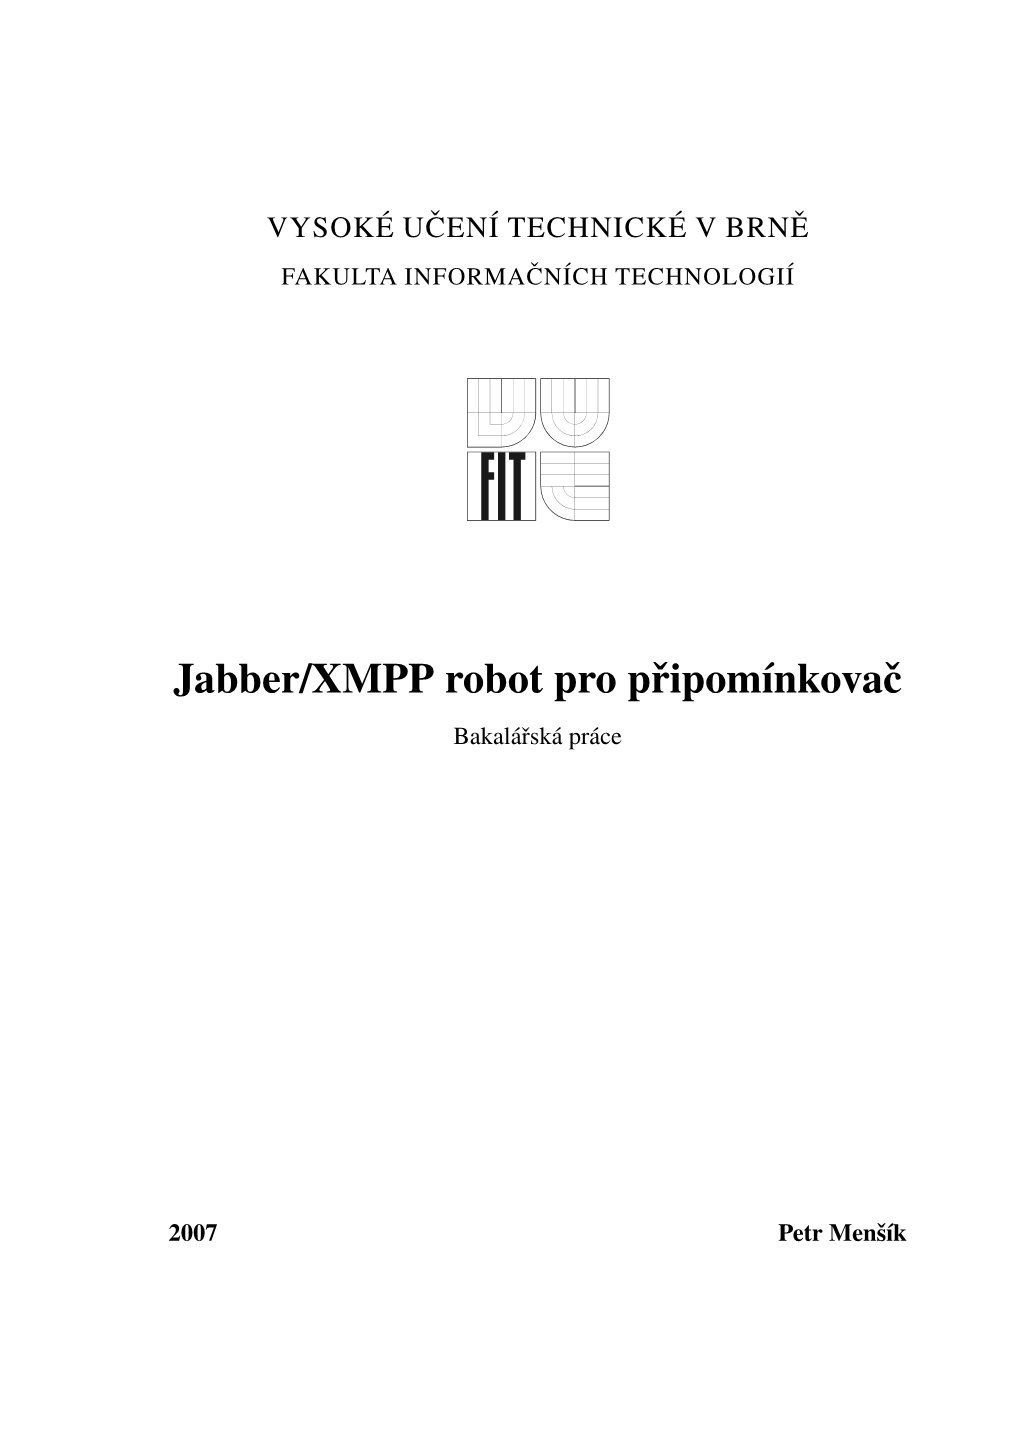 Jabber/XMPP Robot Pro Pˇripomınkovaˇc